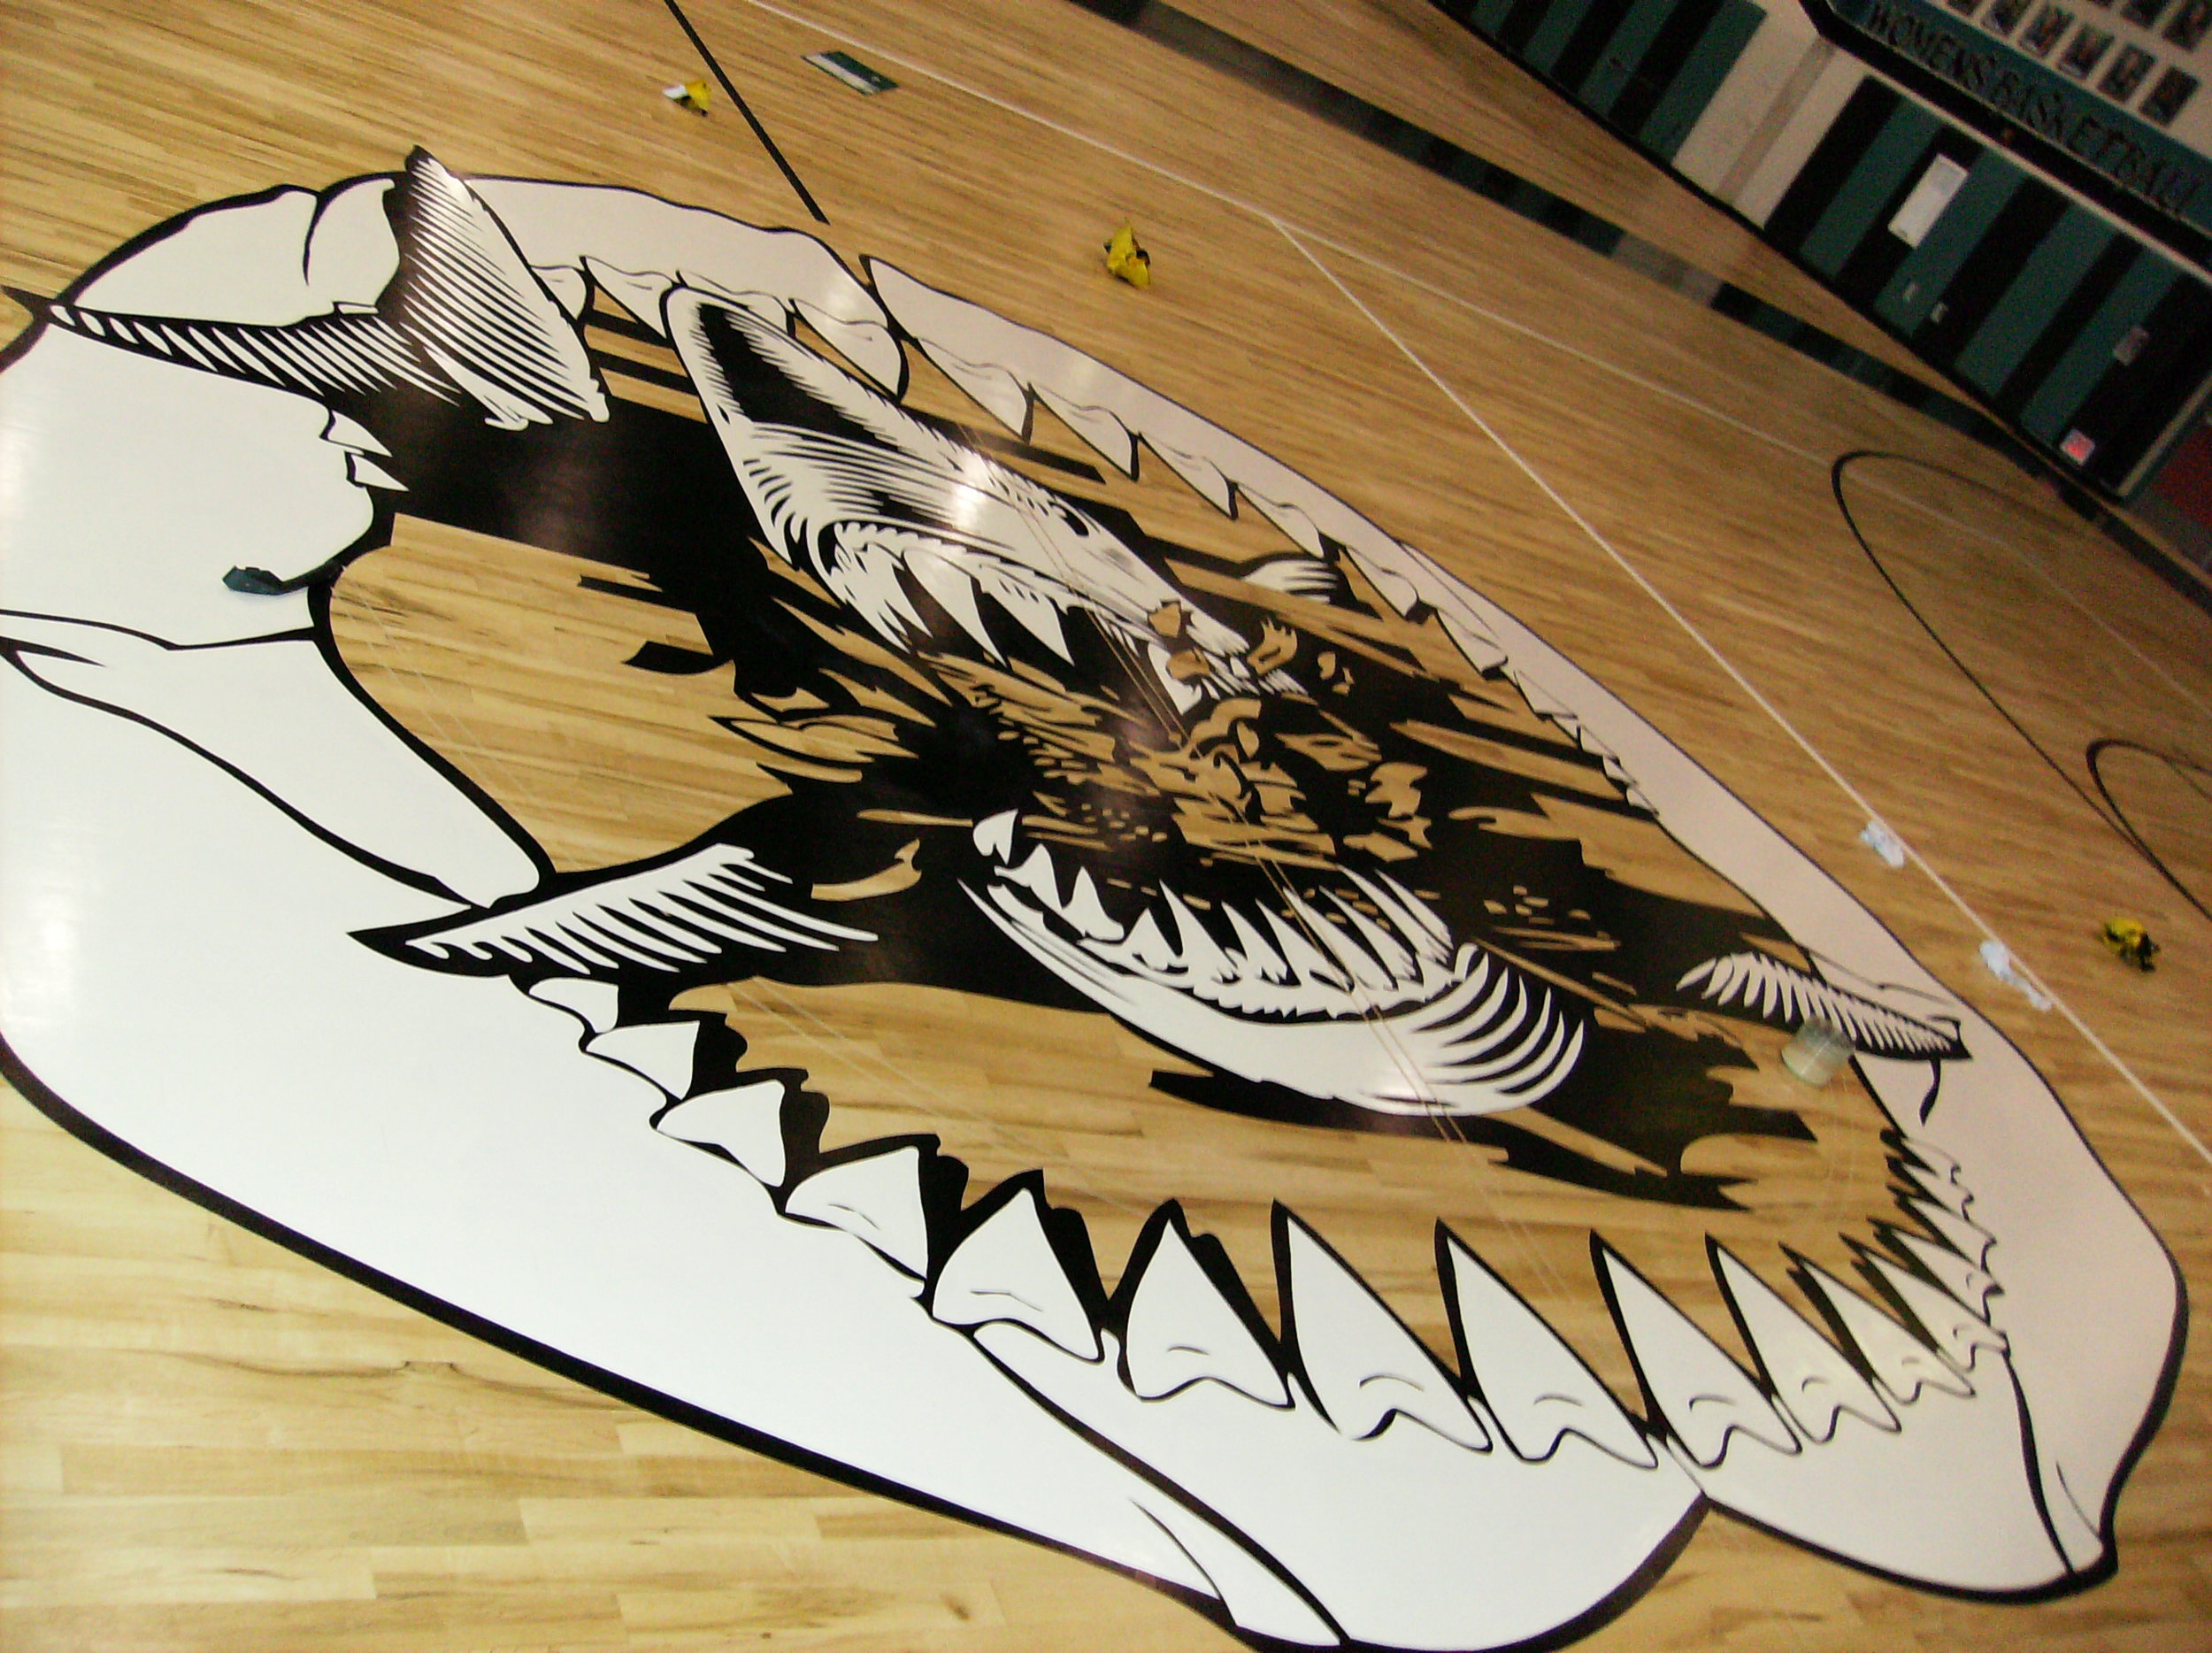 Santiago High School gym wood floor hand painted graphics